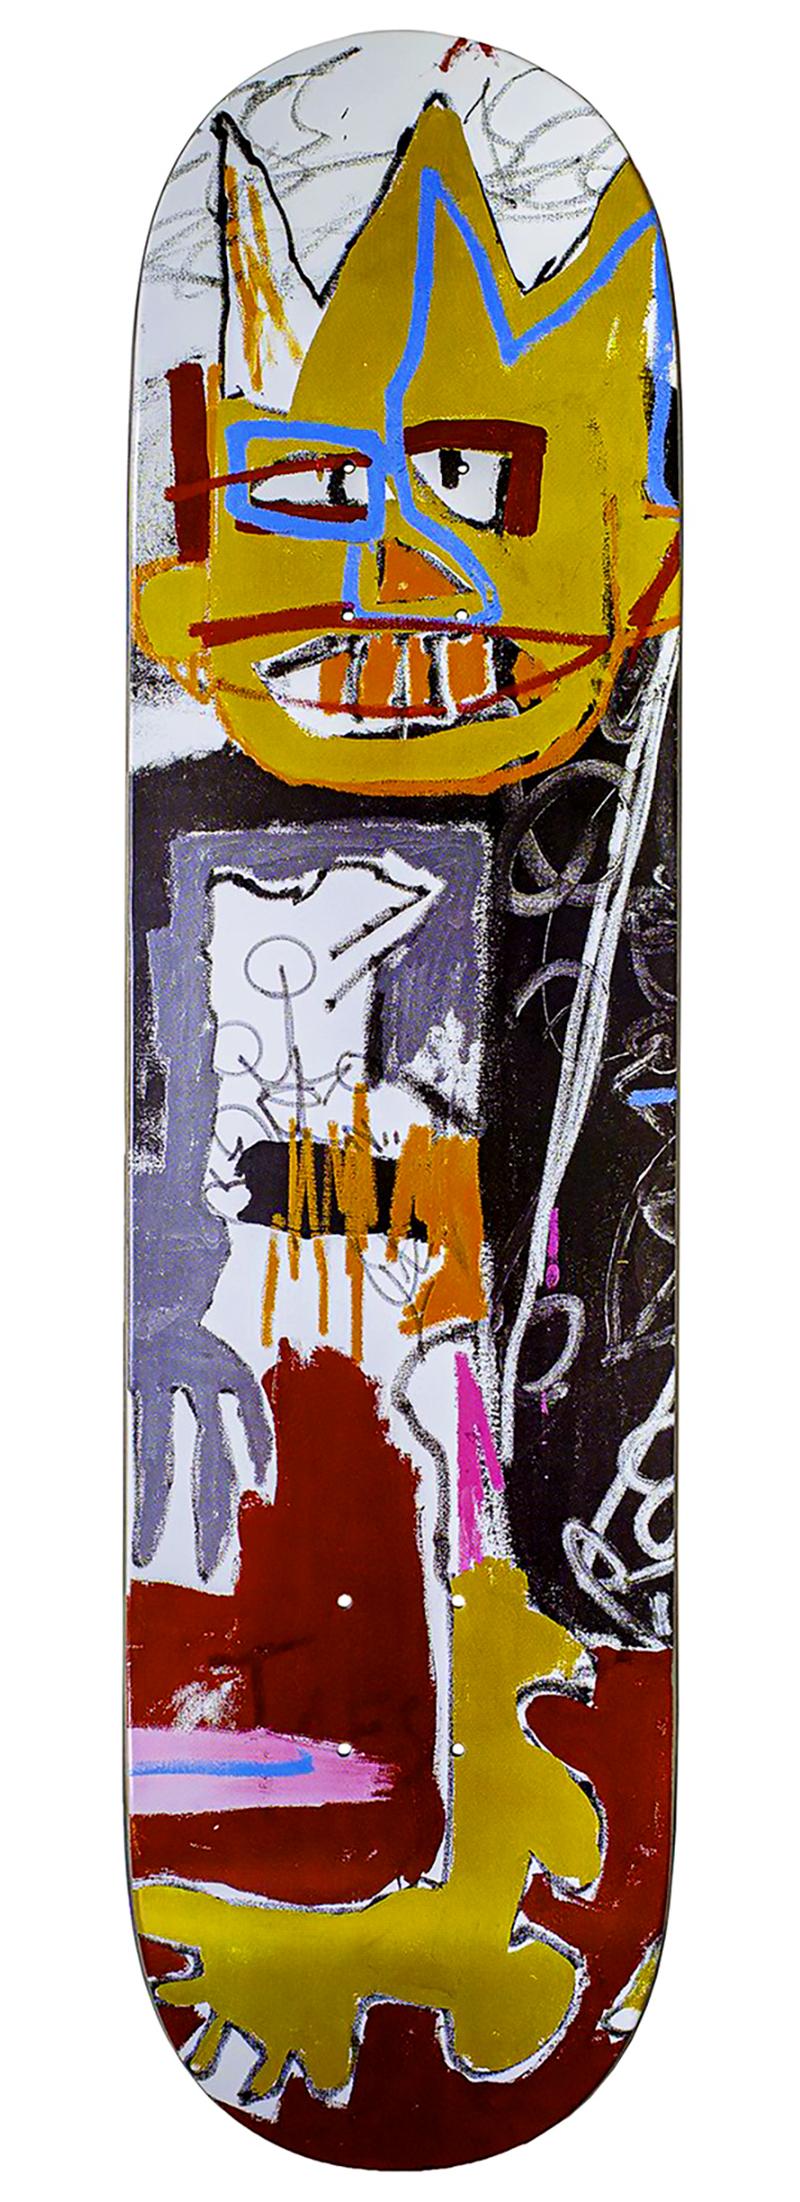 Basquiat Skateboard Deck (Basquiat A-One)  - Sculpture by (after) Jean-Michel Basquiat